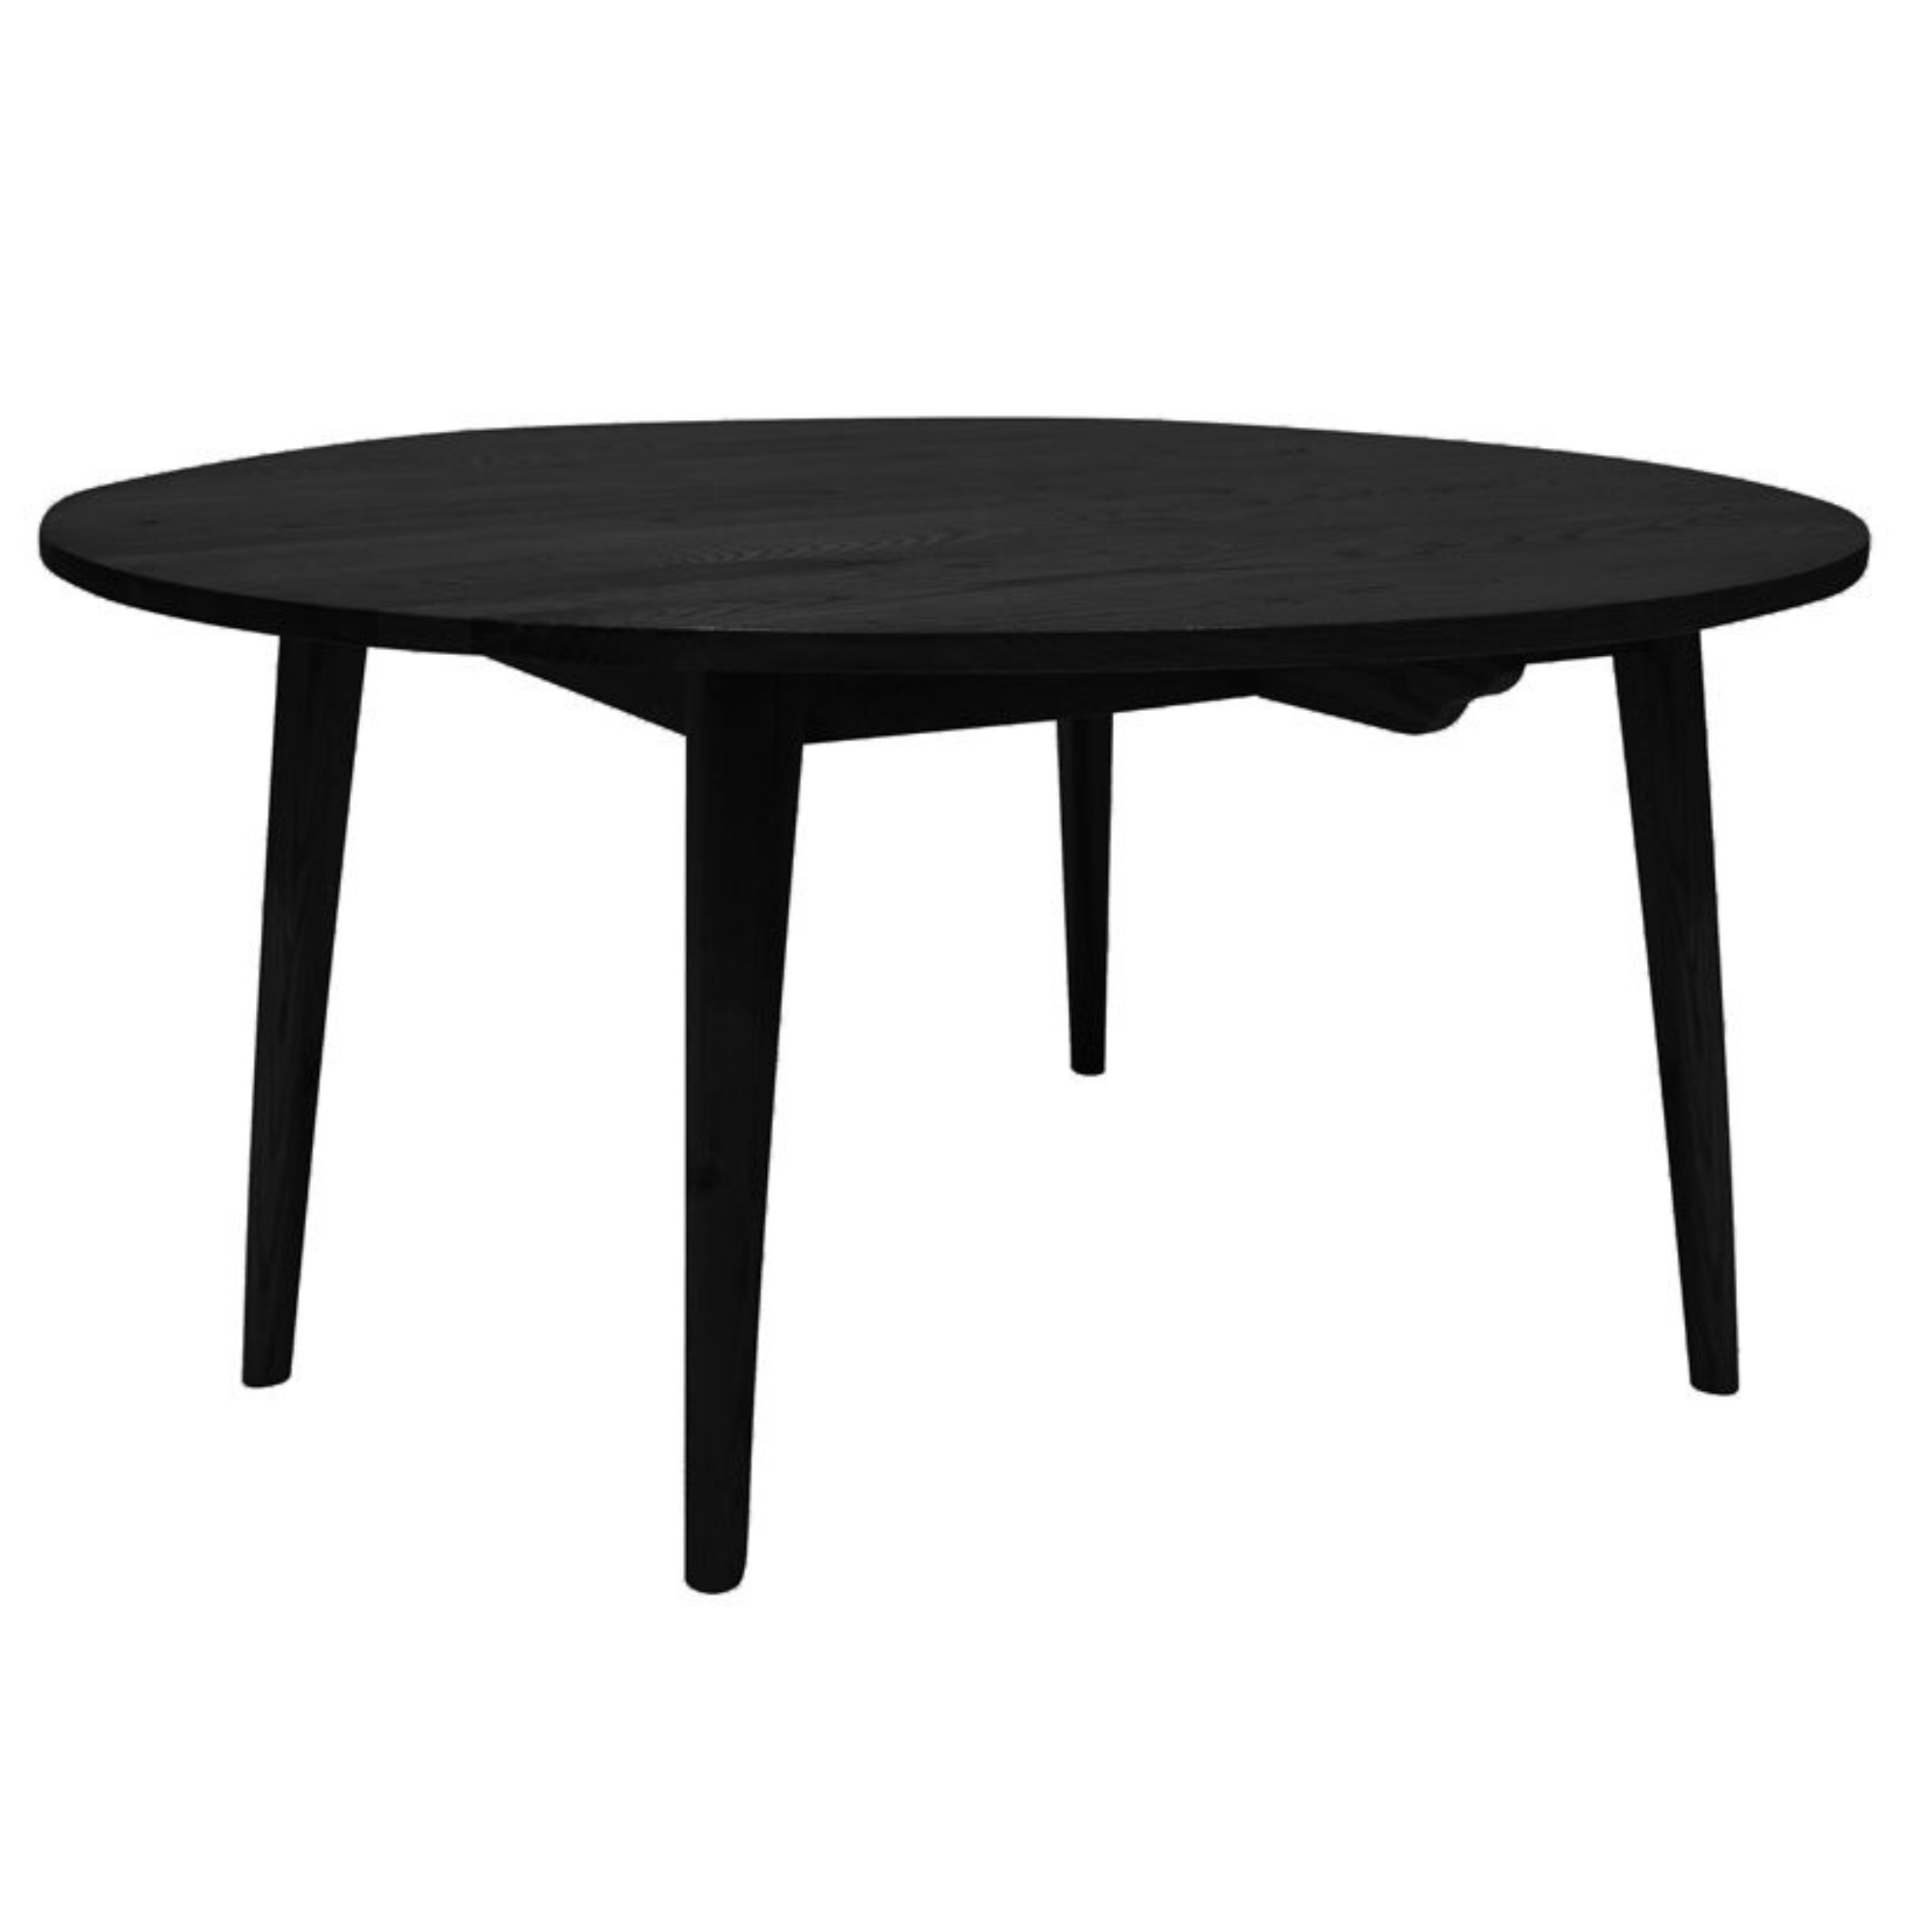 VAASA BLACK ROUND OAK DINING TABLE | 2 SIZES